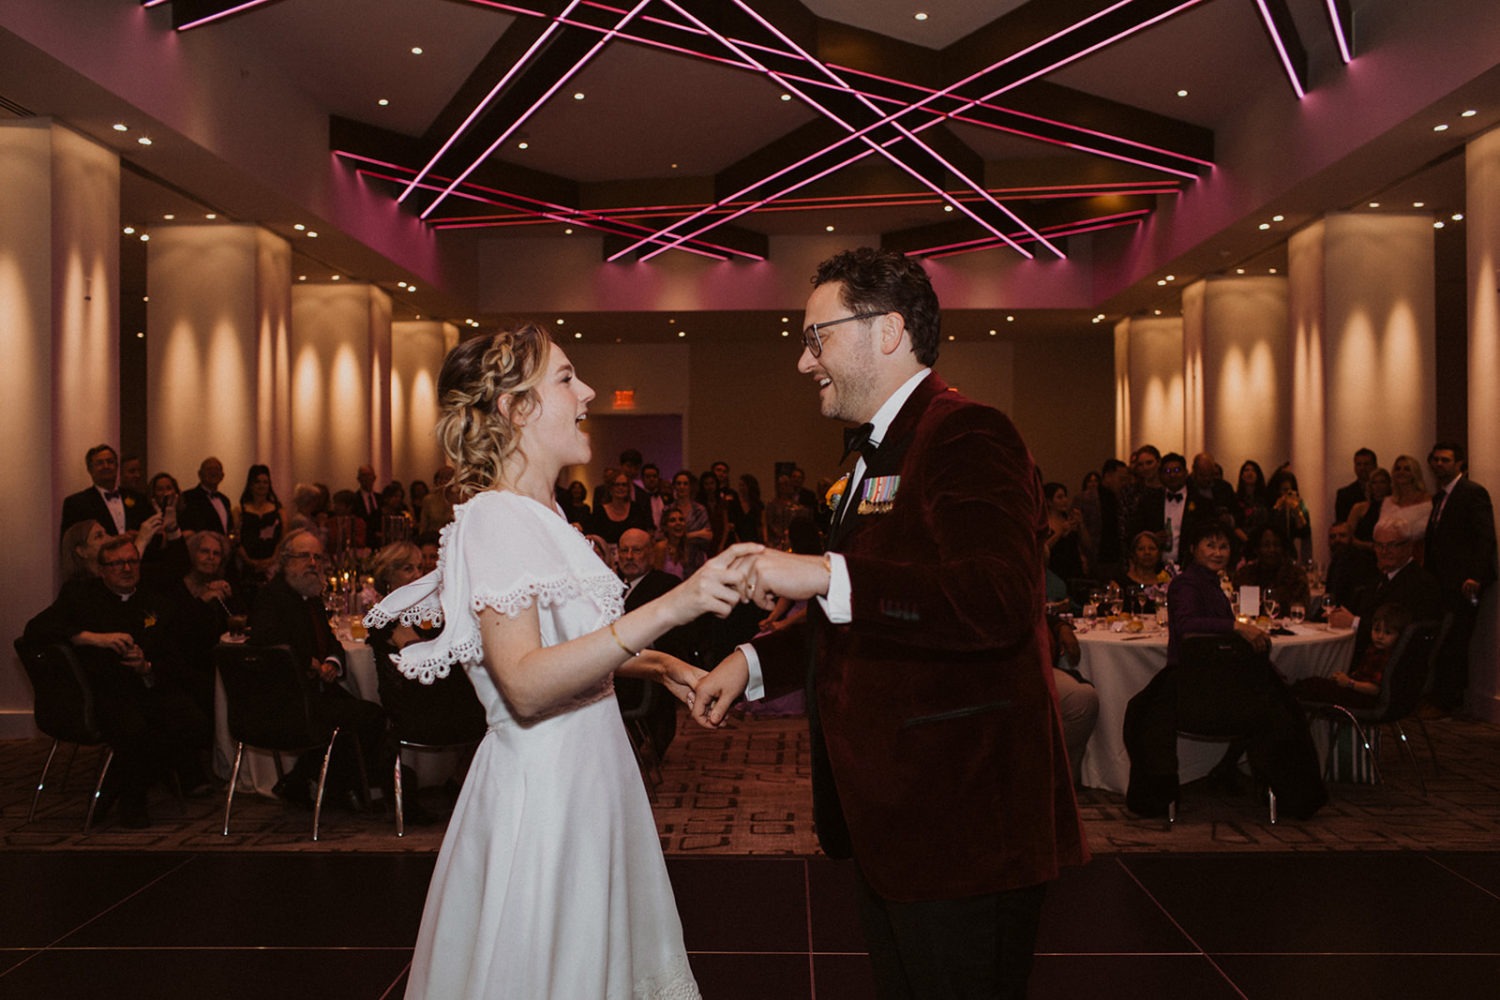 Couple dances at wedding reception